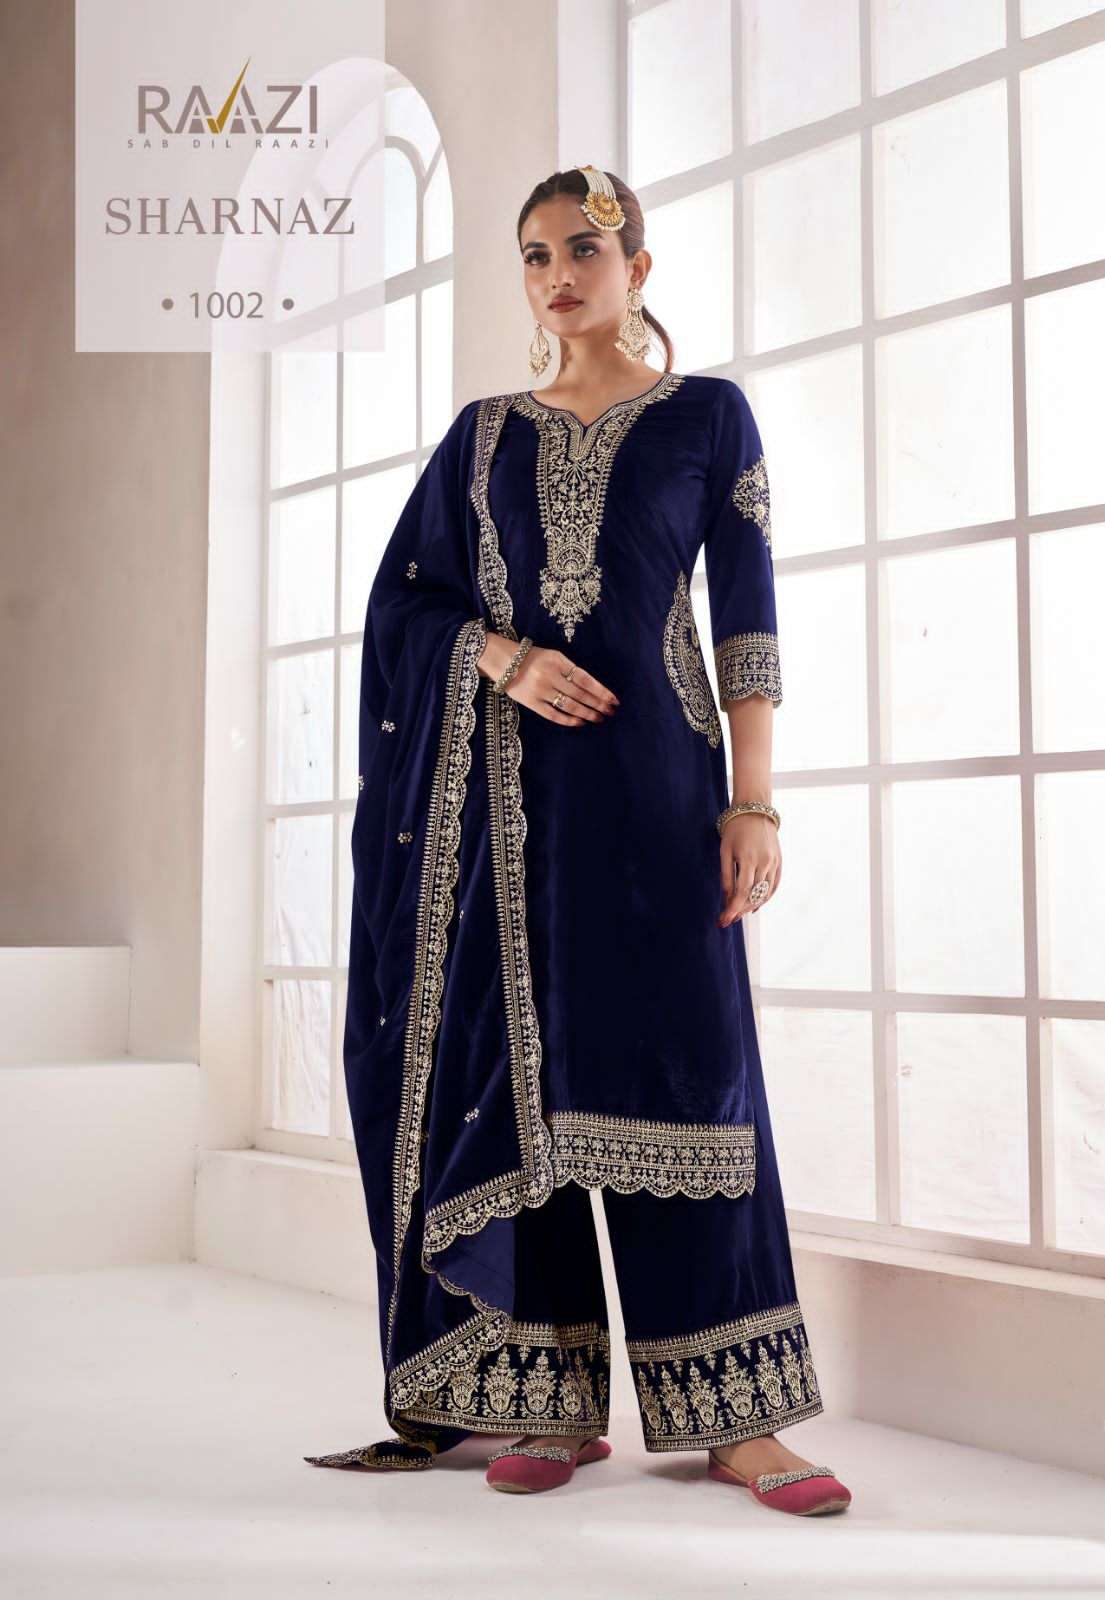 rama fashion sharnaz 1001-1004 series latest designer salwar kameez wholesaler surat gujarat